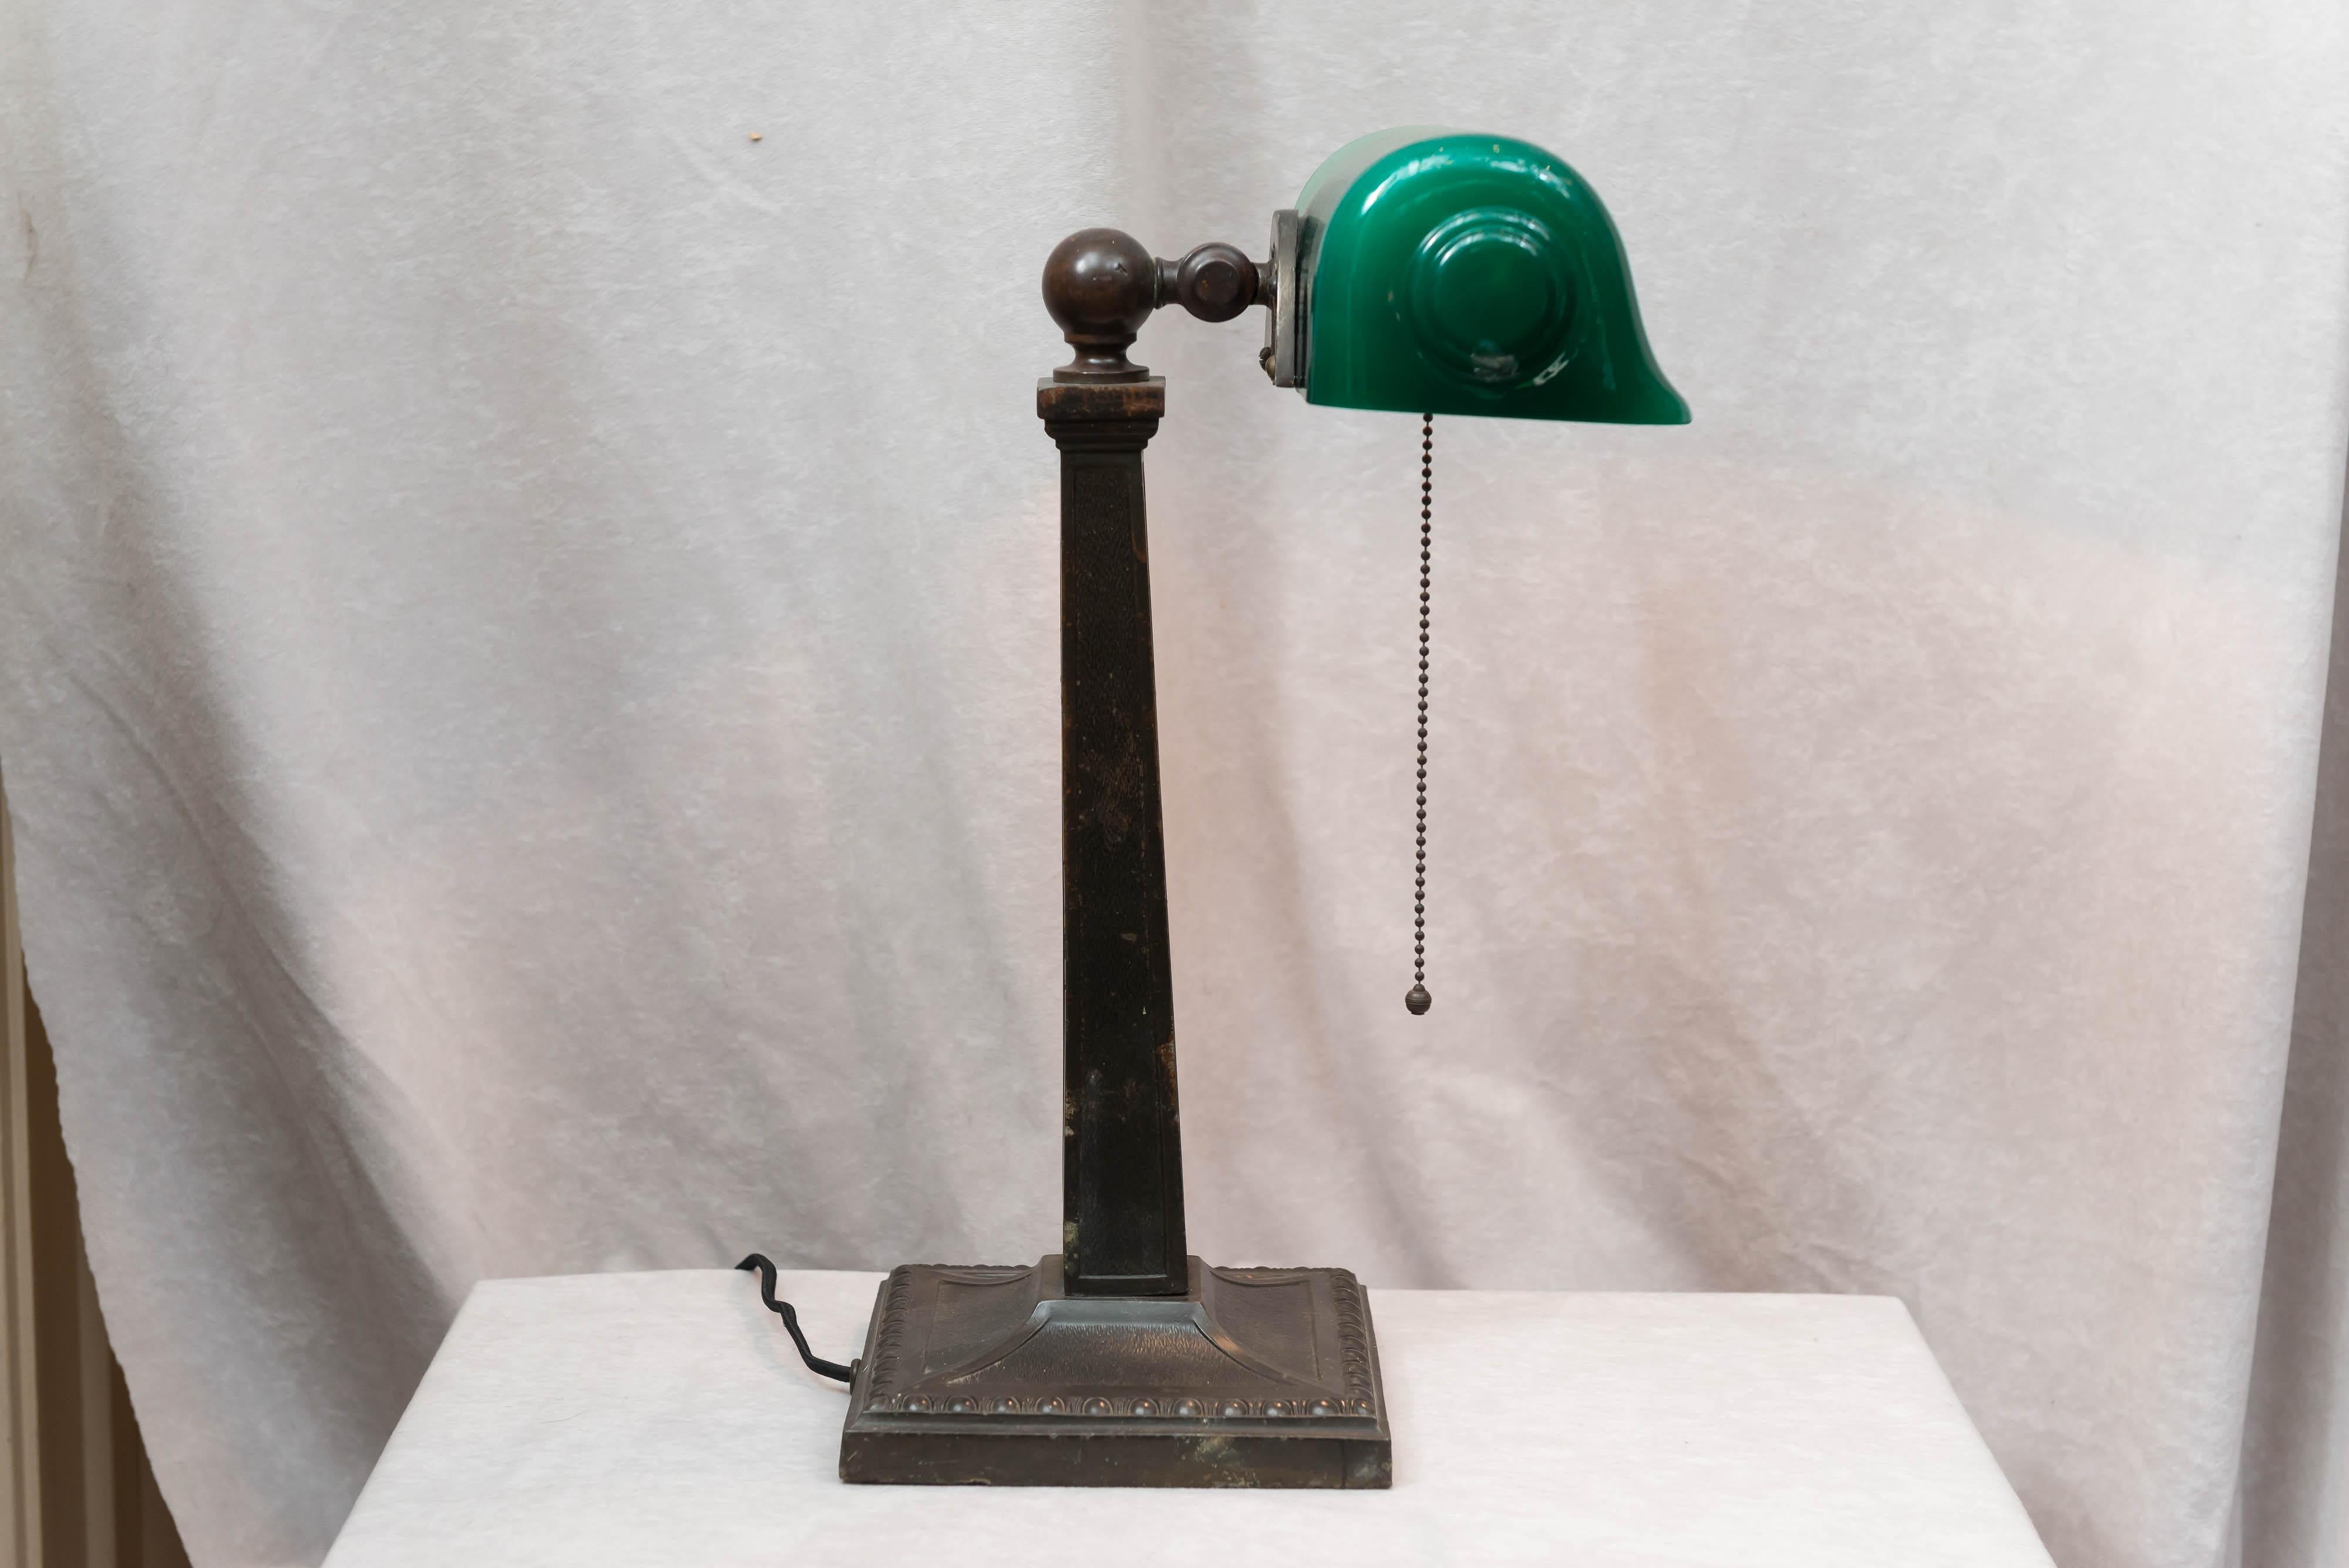 Edwardian Green Shaded Banker's Lamp, Signed Verdelite, circa 1917